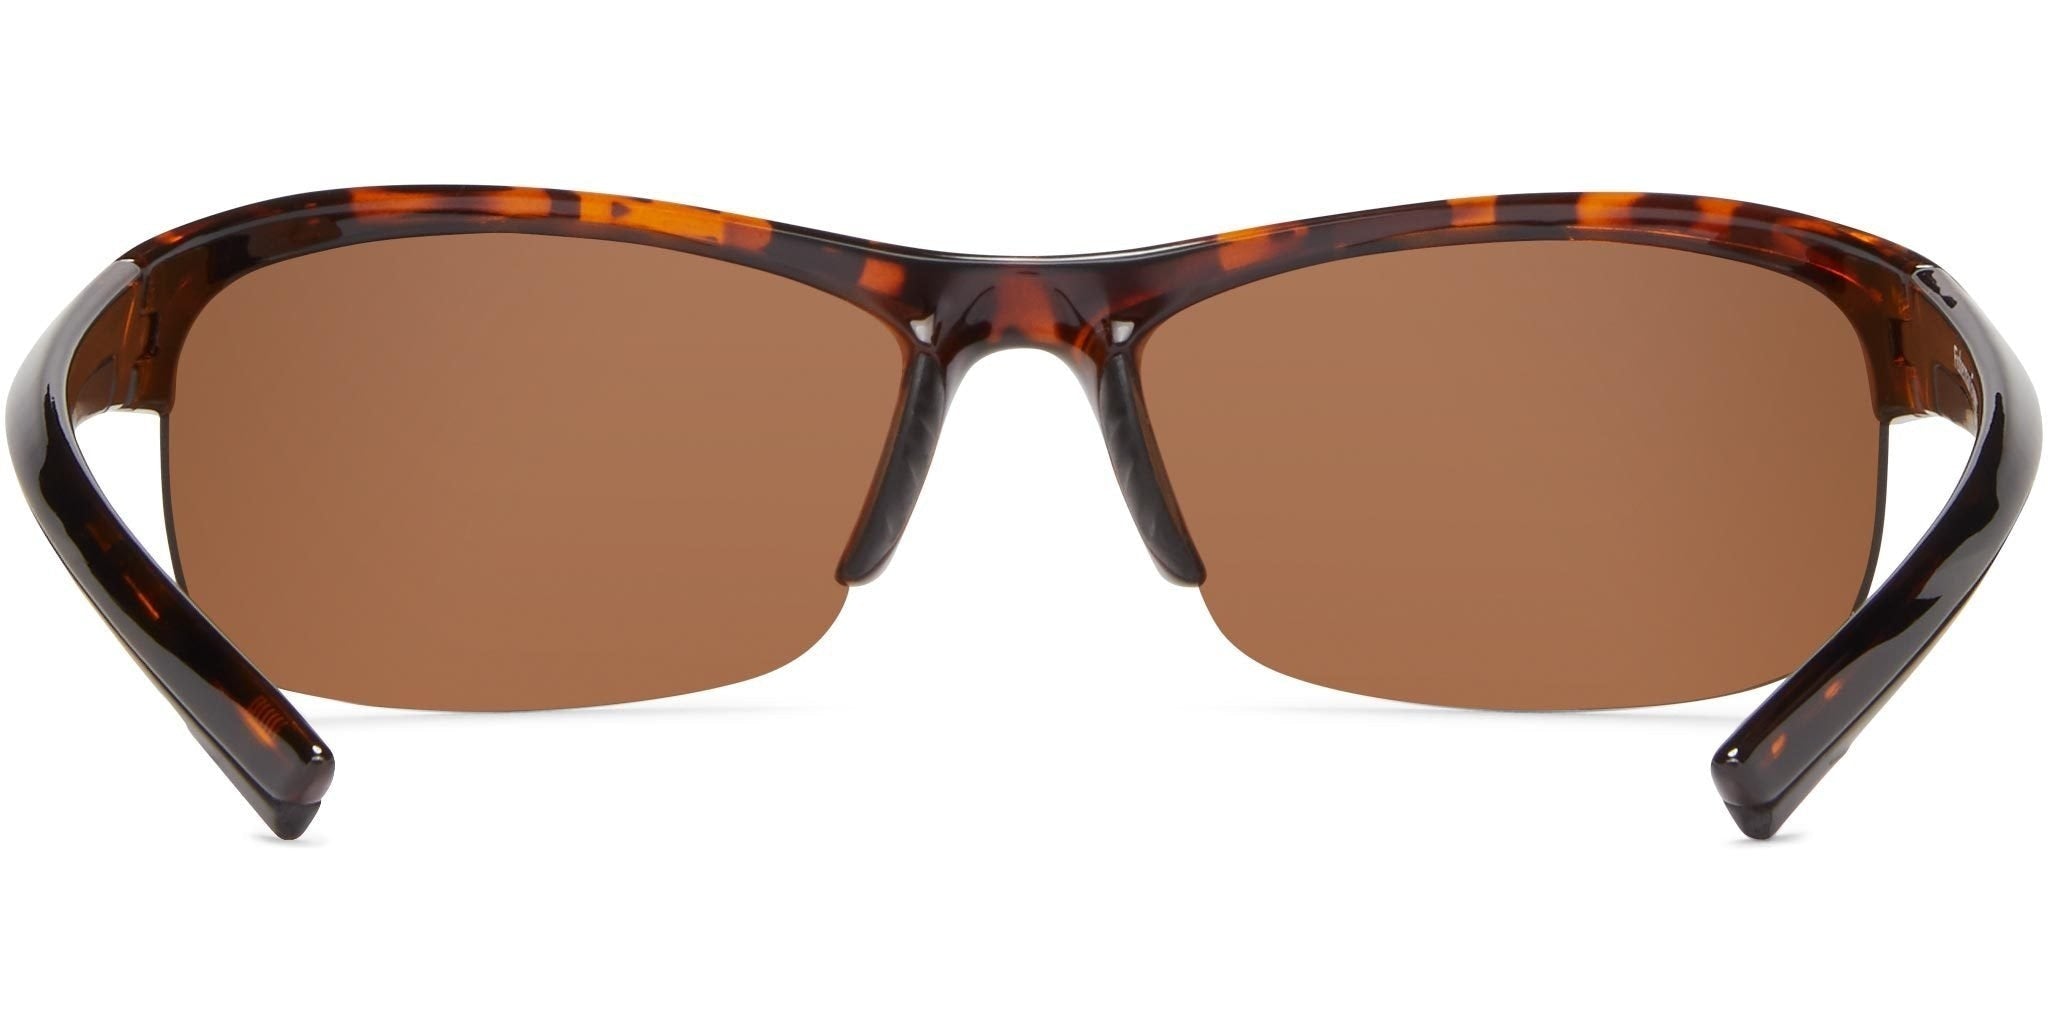 Tern Polarized Sunglasses by Fisherman Eyewear